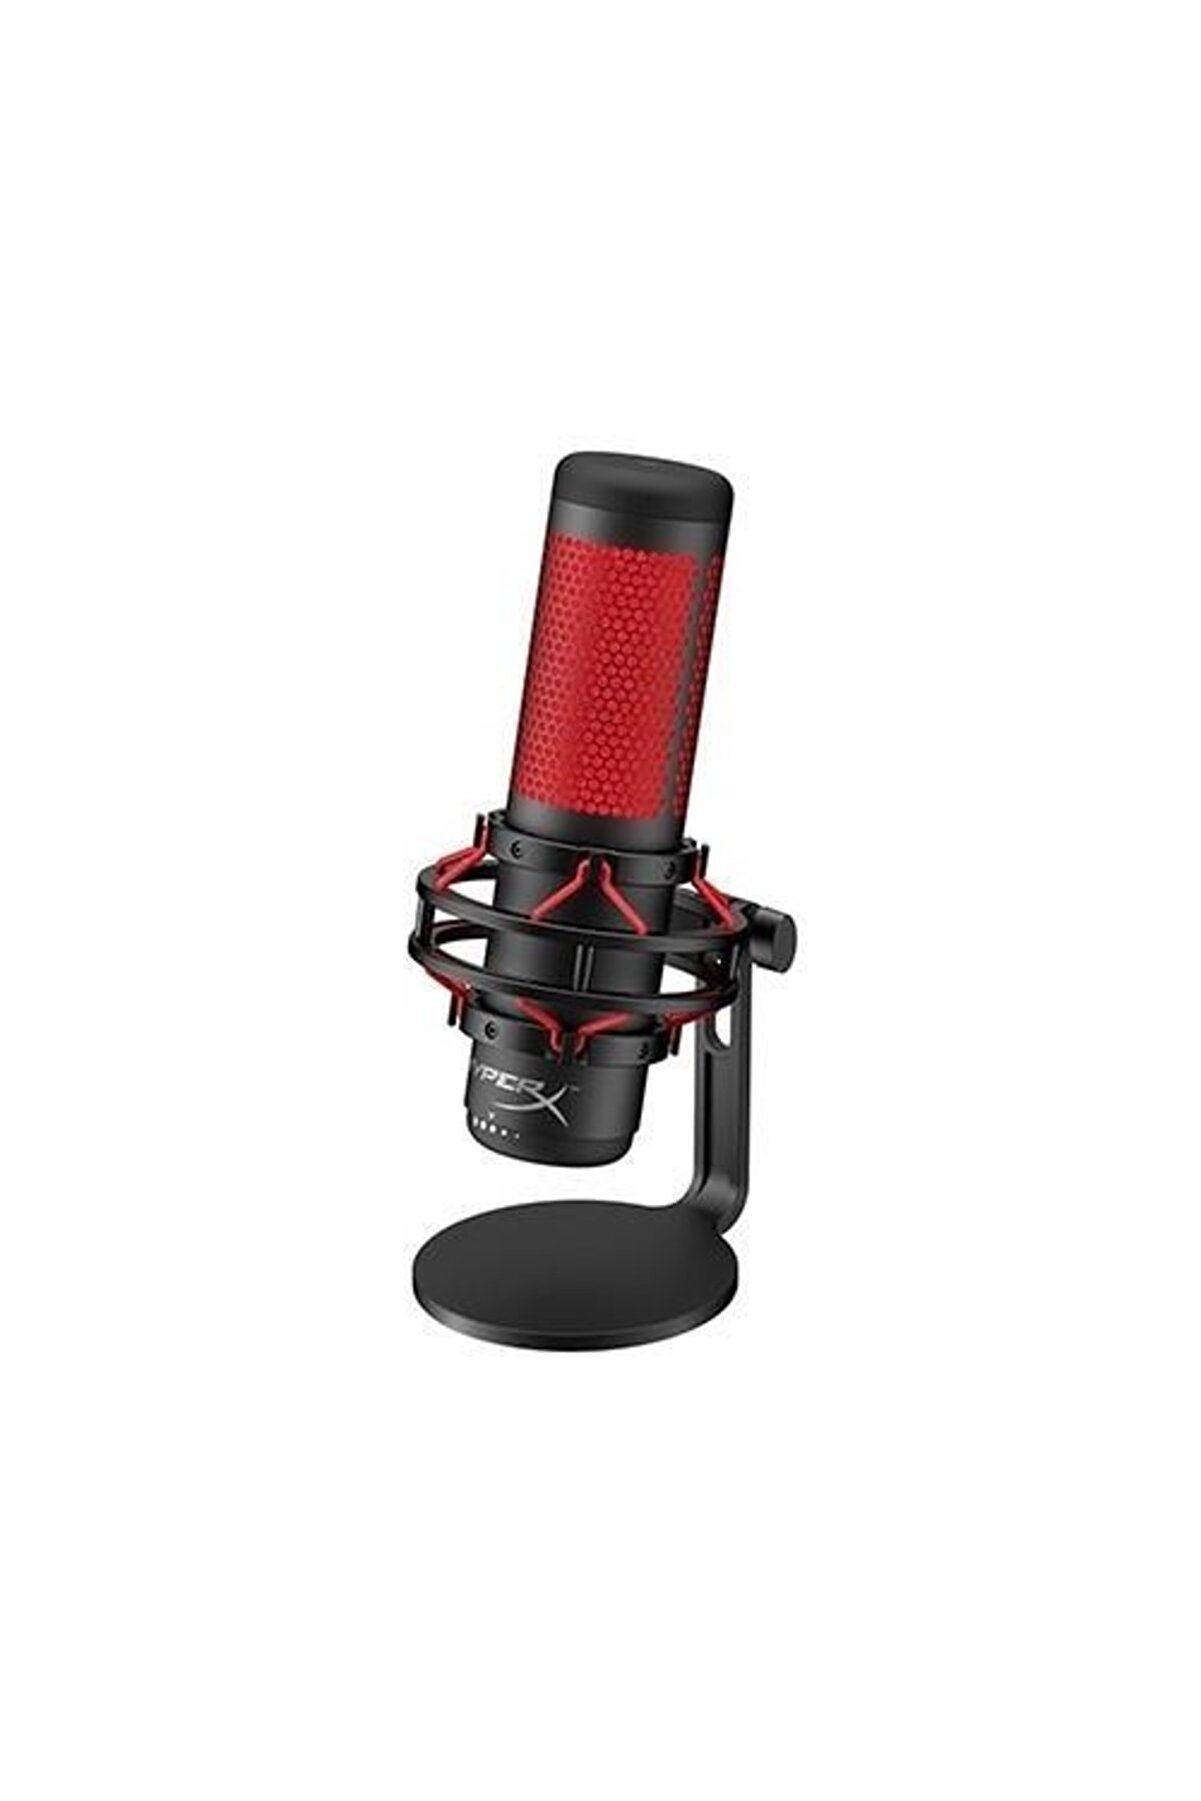 HyperX Quadcast Oyuncu Mikrofonu - Kırmızı